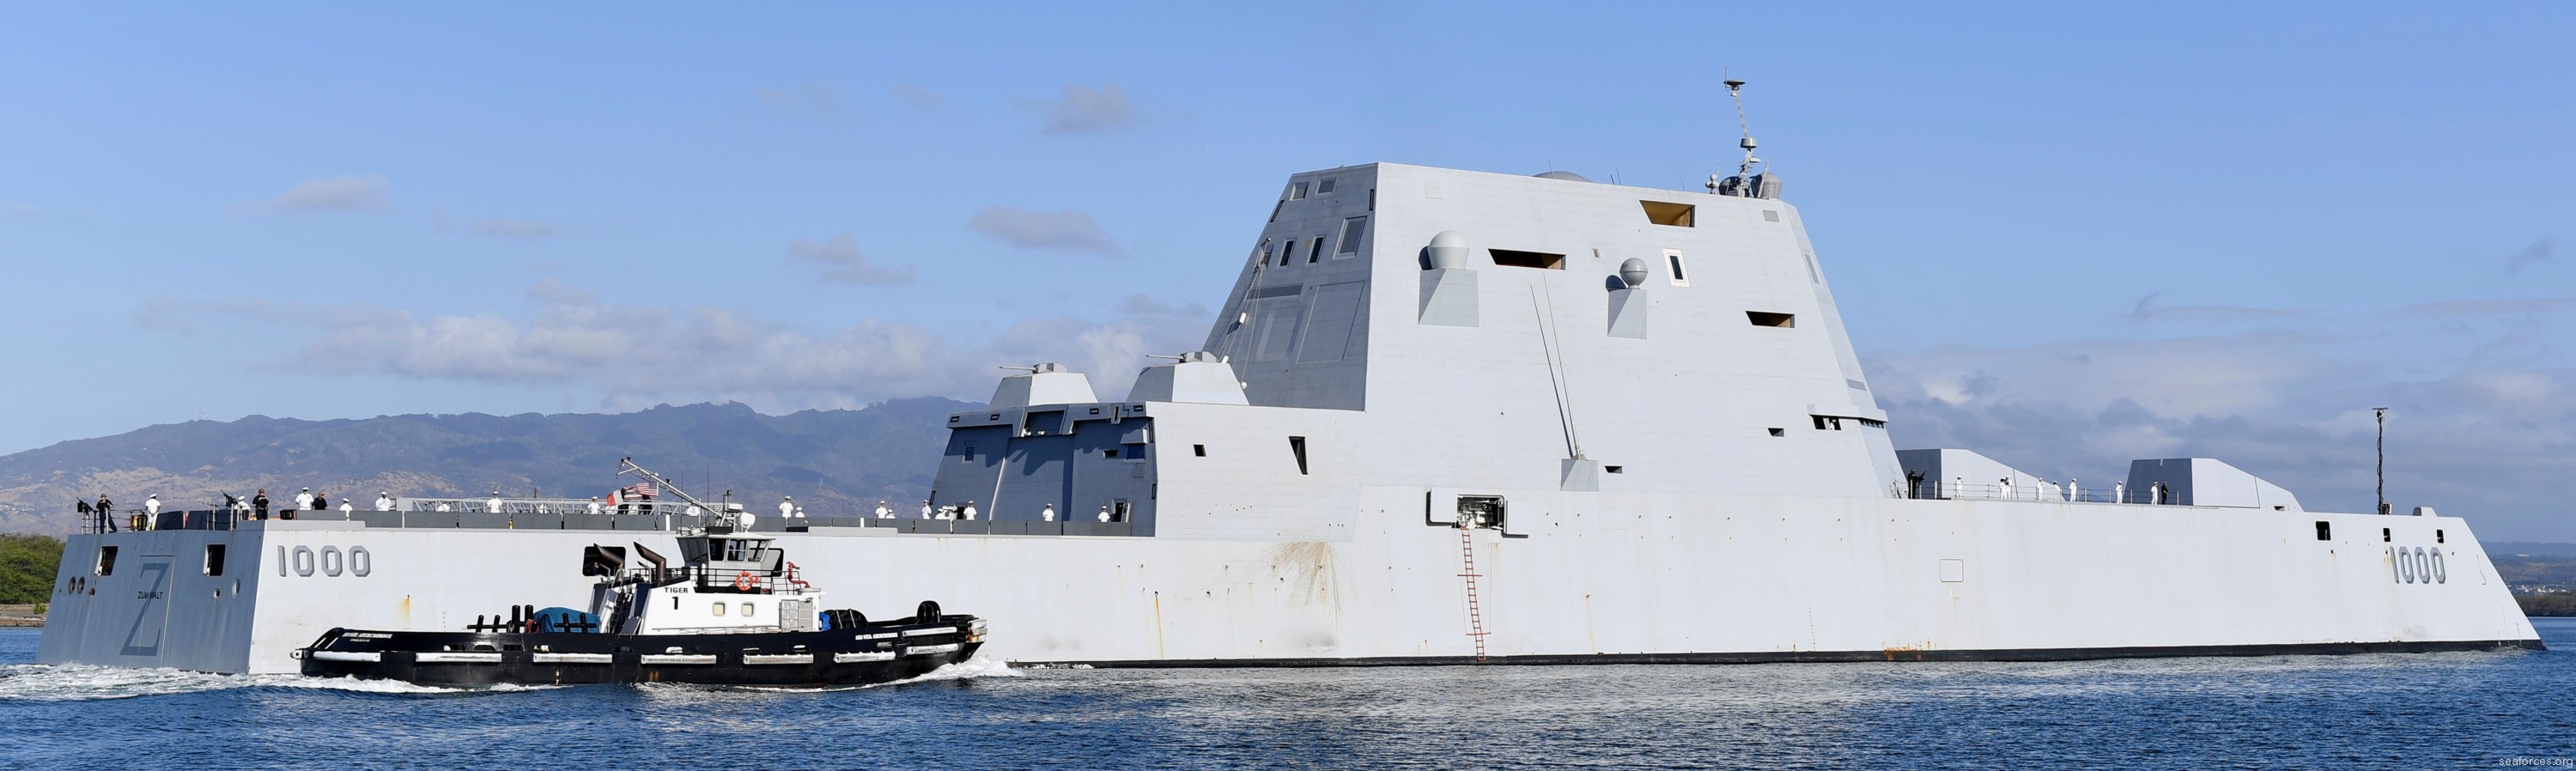 ddg-1000 uss zumwalt guided missile destroyer us navy 77 pearl harbor hawaii